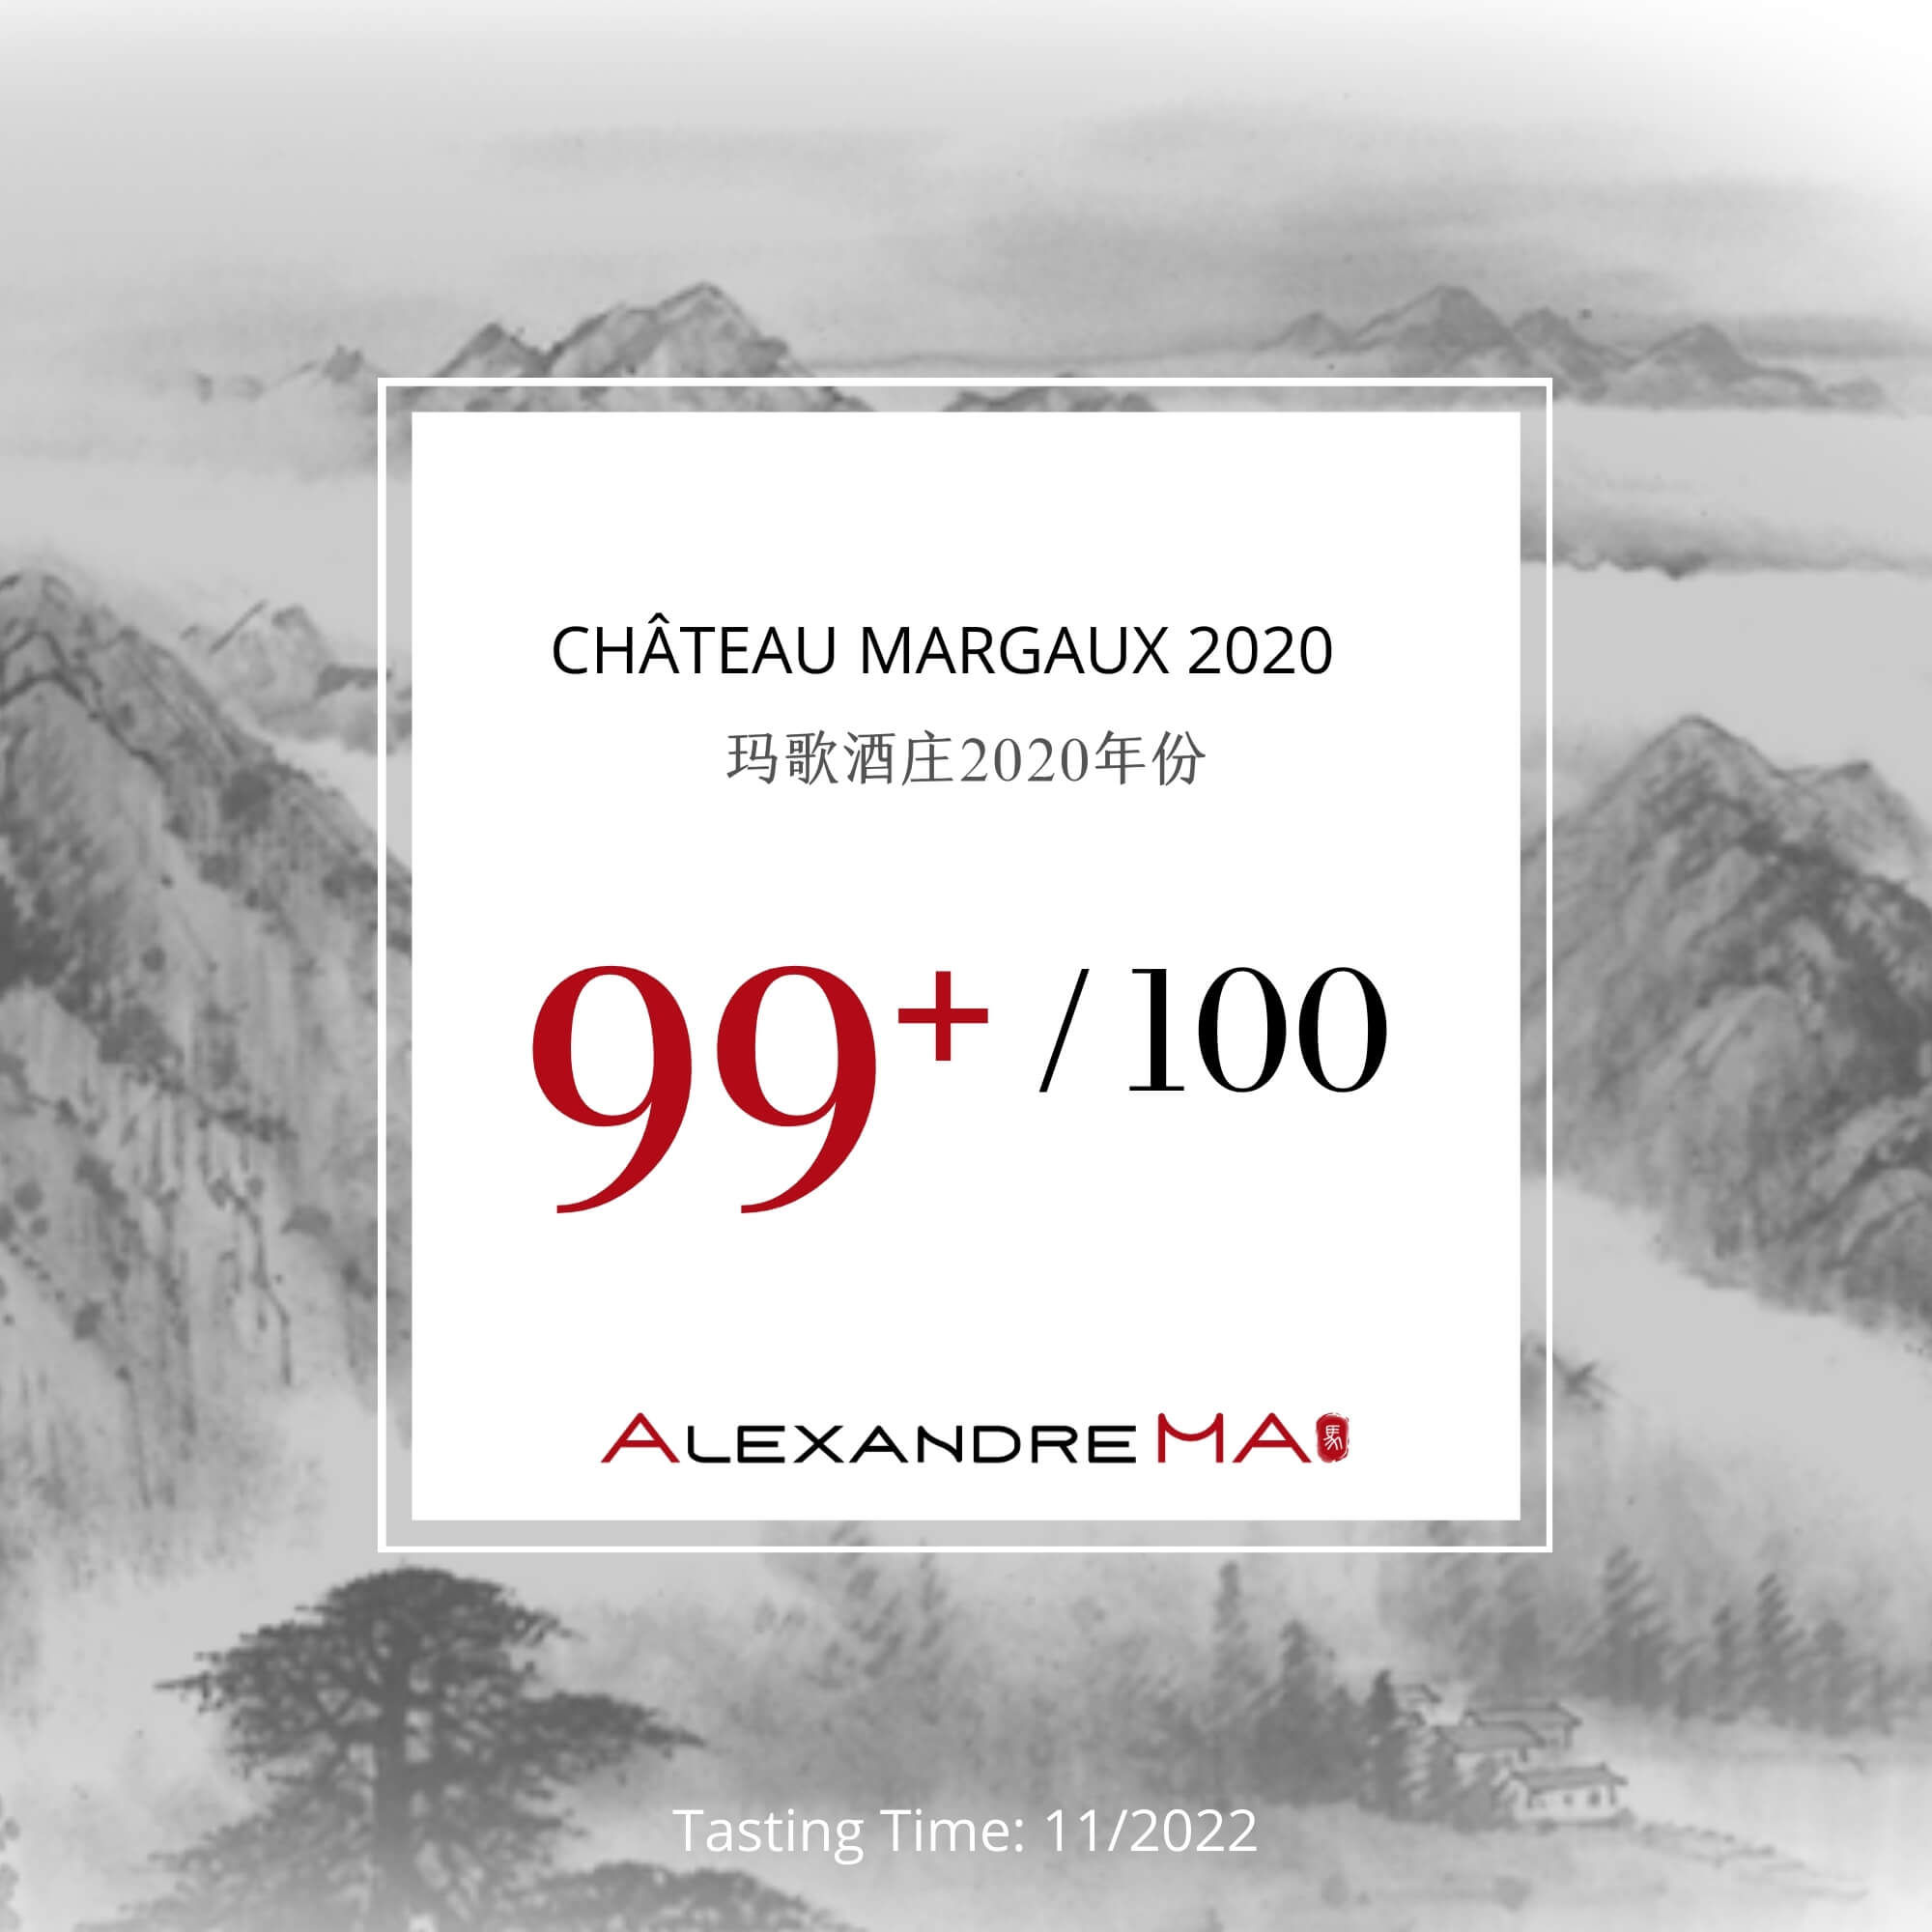 Château Margaux 2020 - Alexandre MA